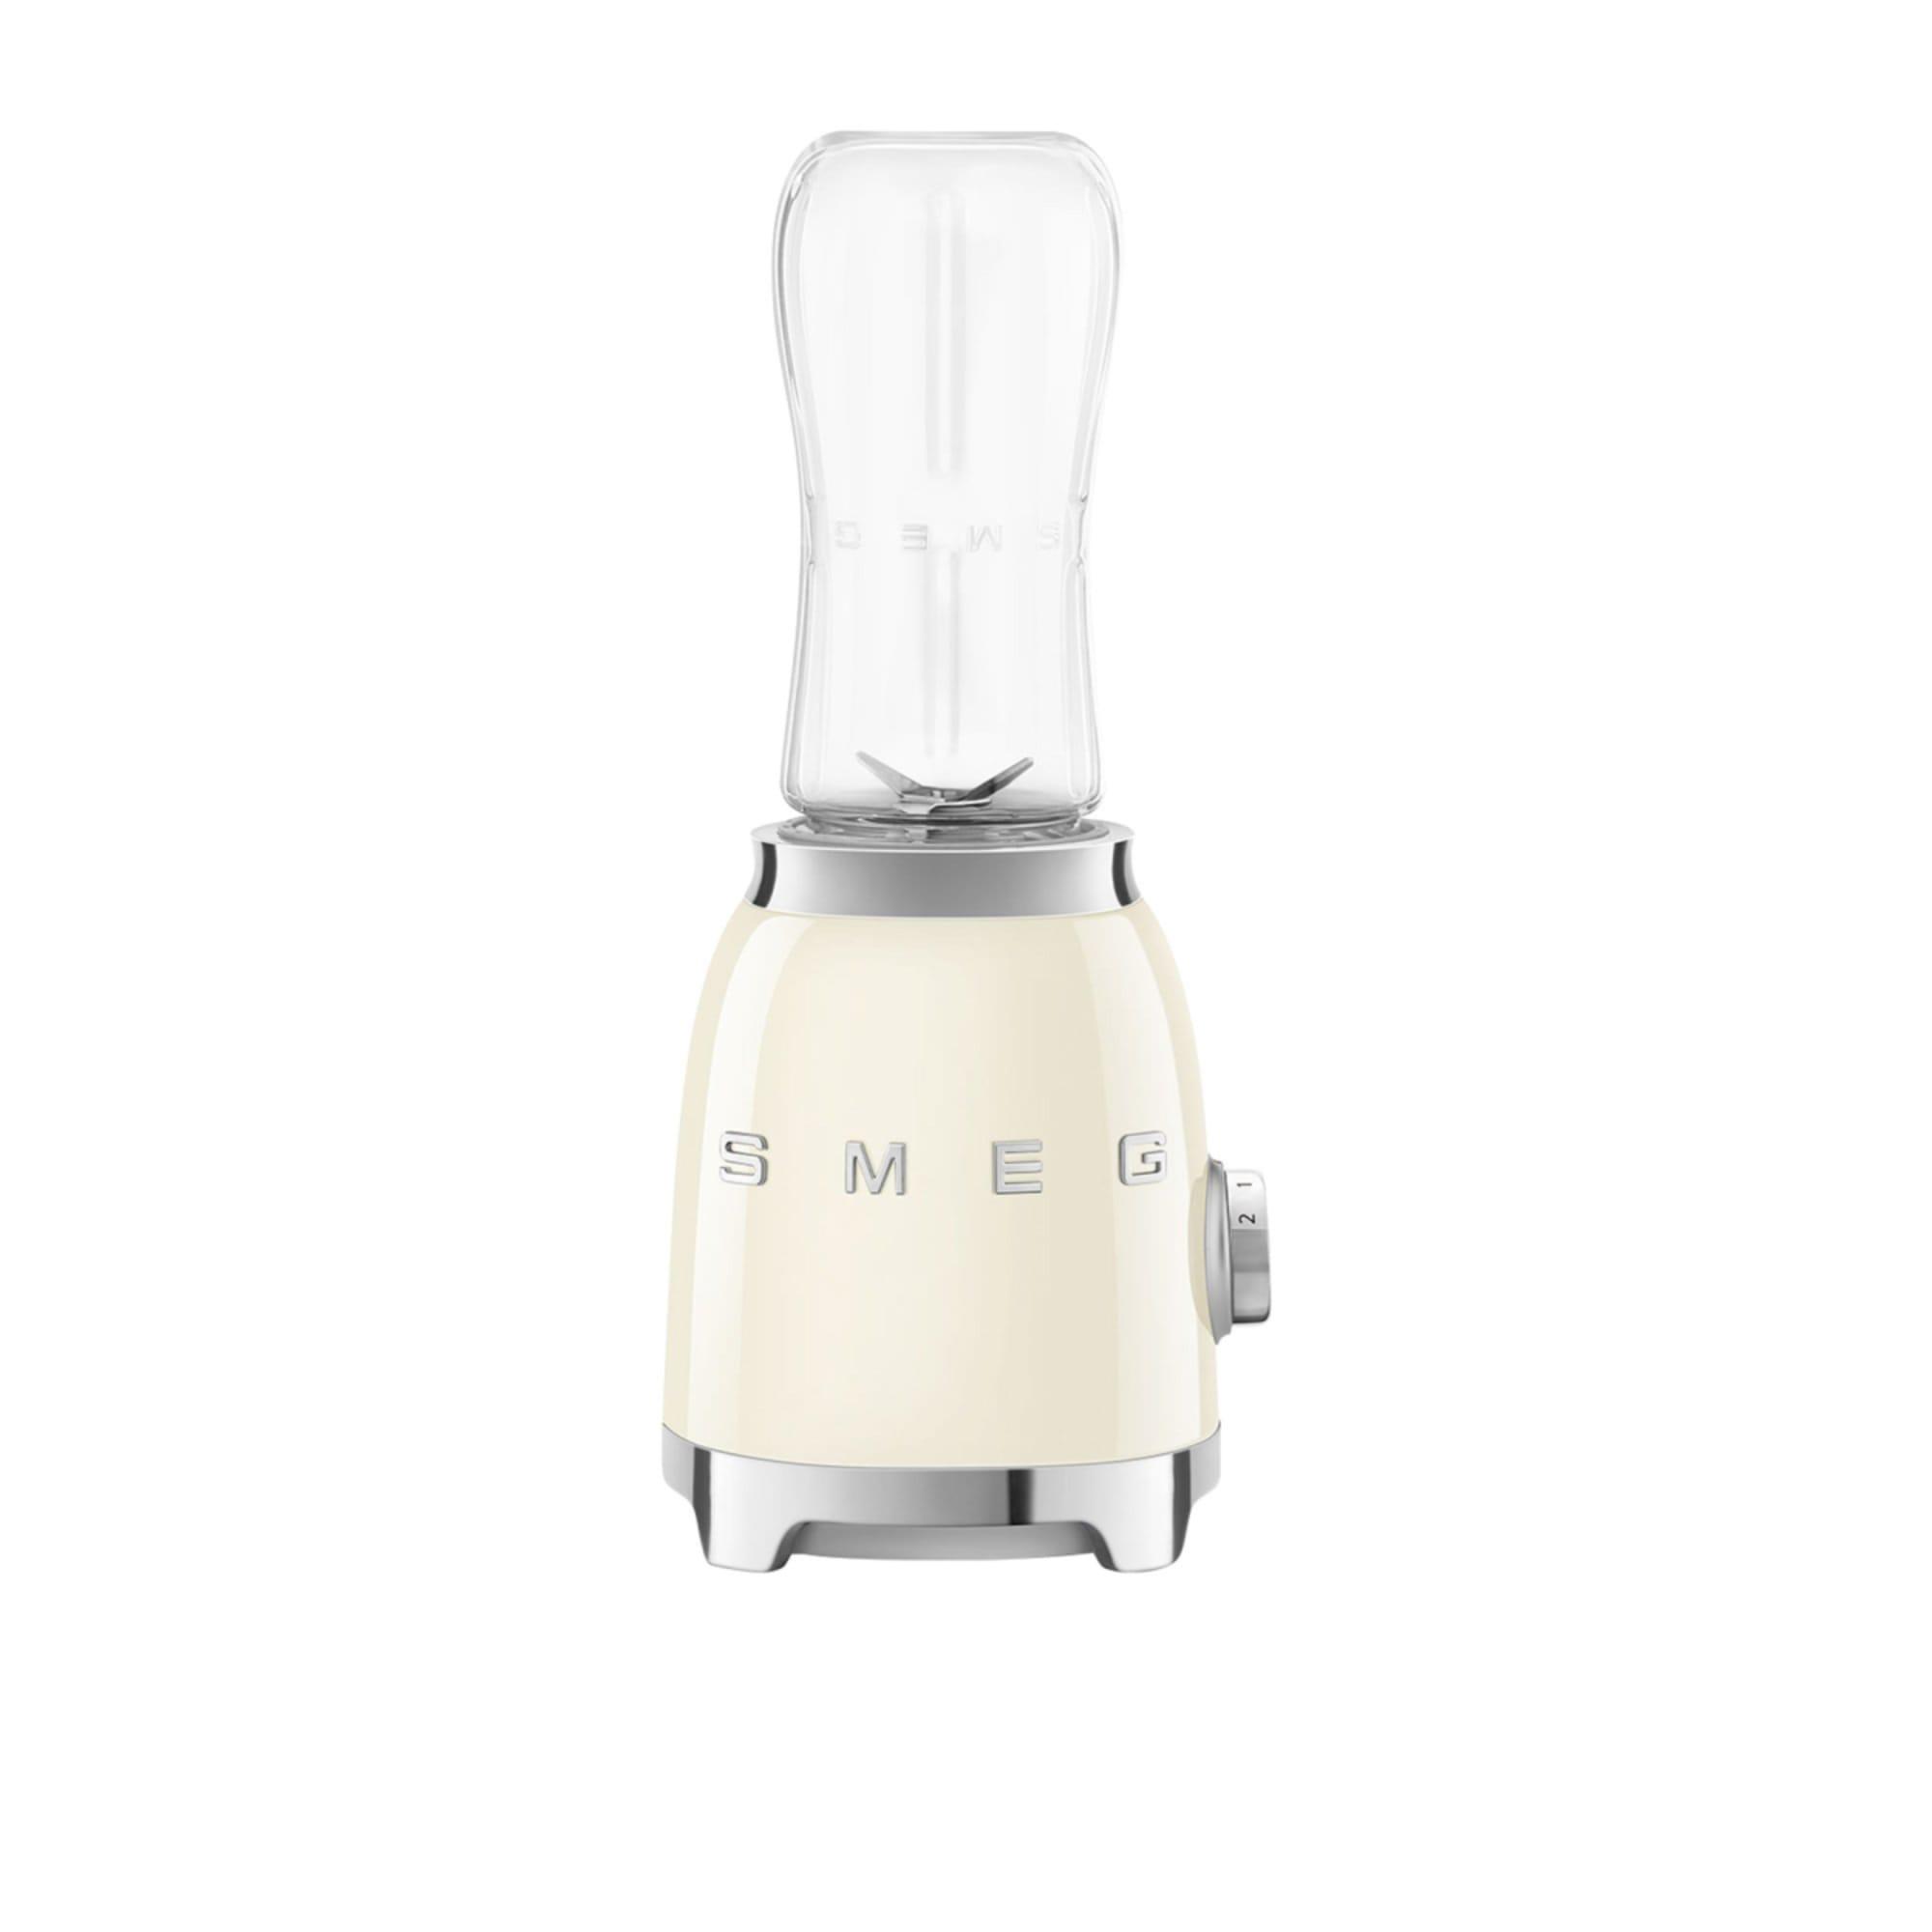 Smeg 50's Retro Style Mini Blender Cream Image 1